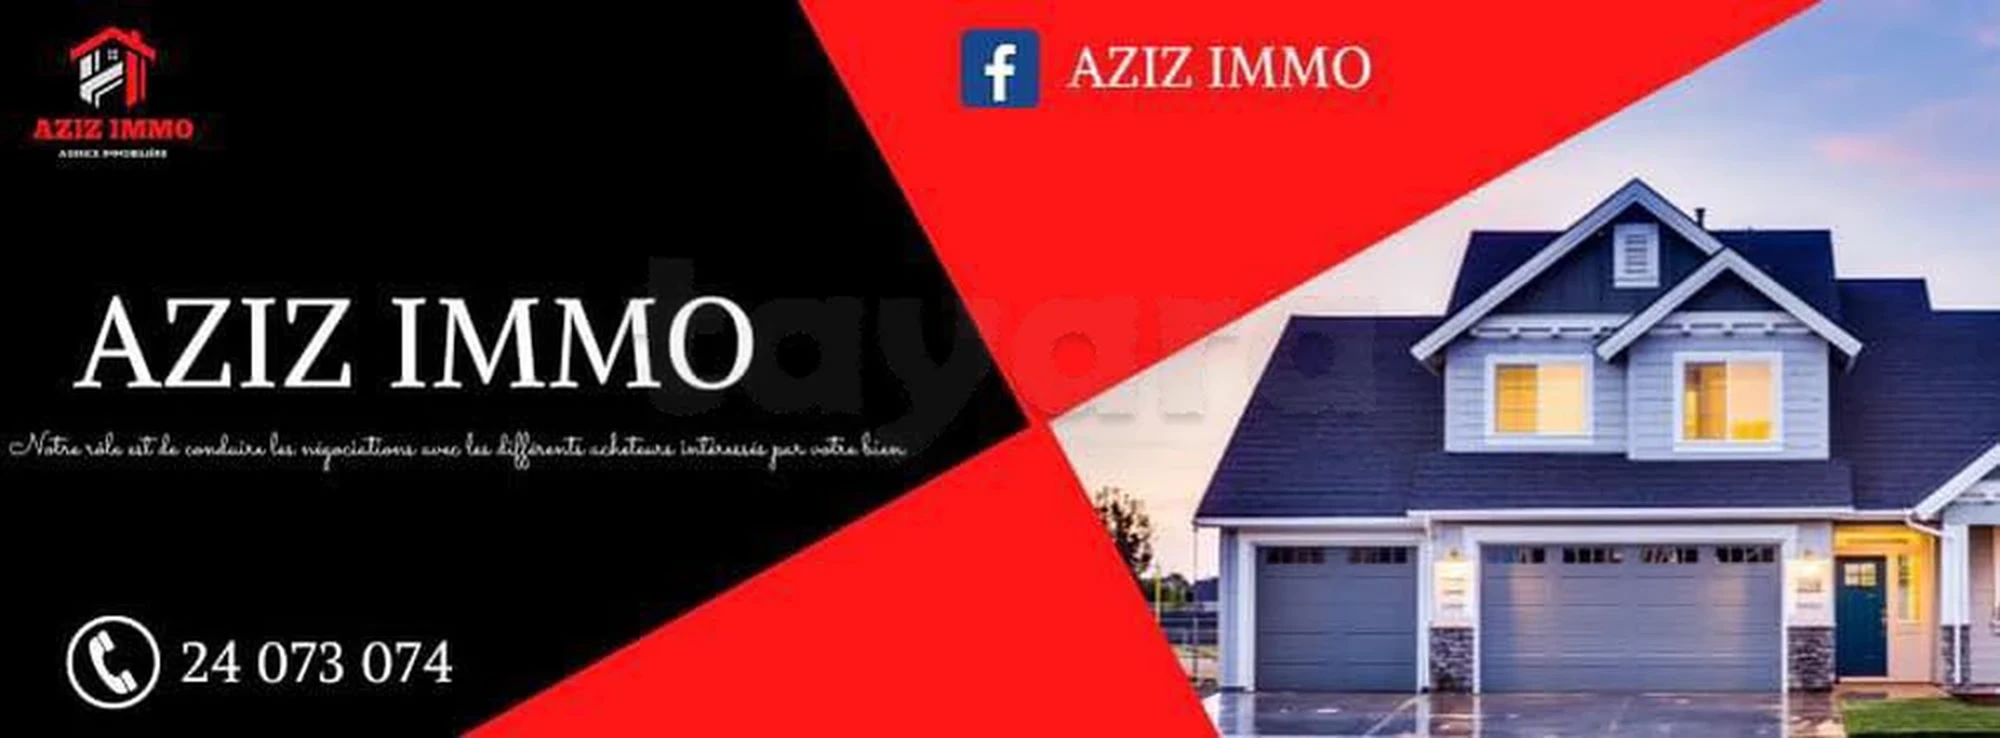 tayara shop cover of AZIZ IMMO